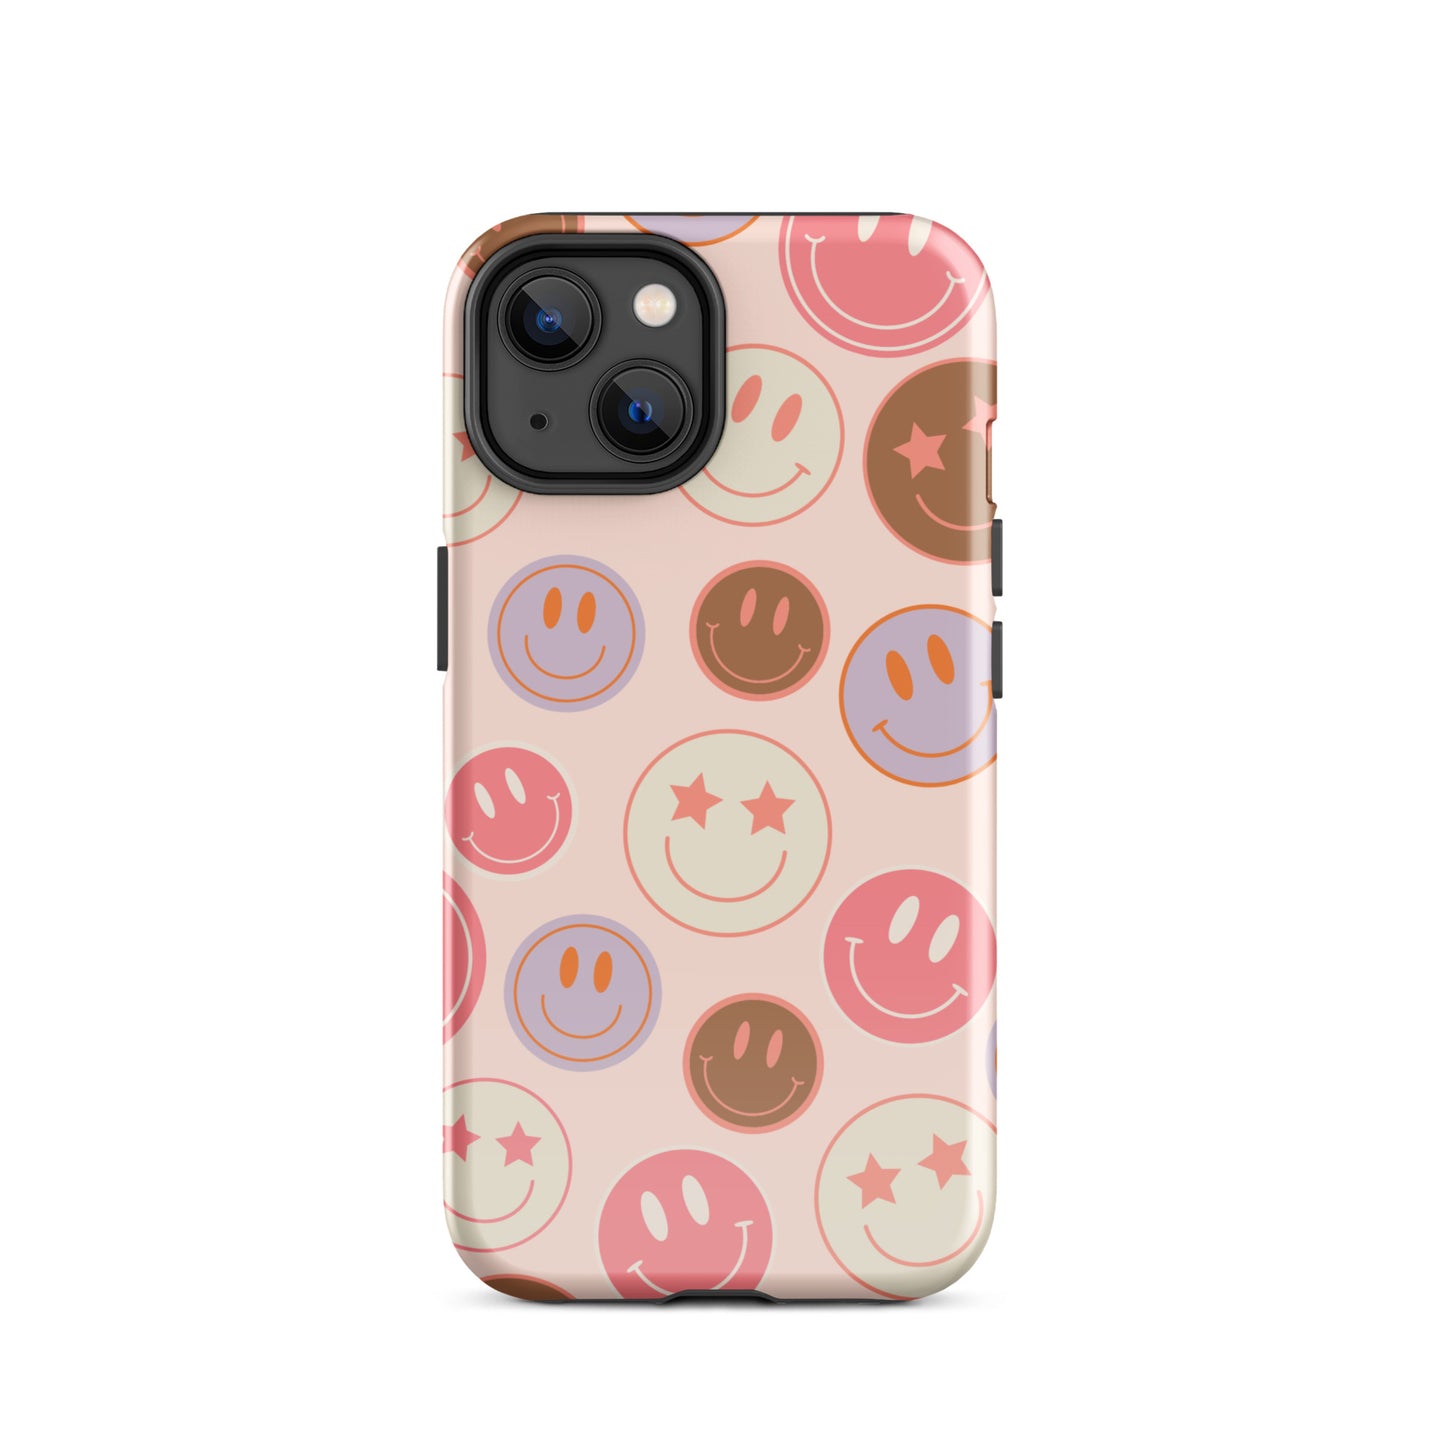 Preppy Pink Smiley Faces iPhone Case